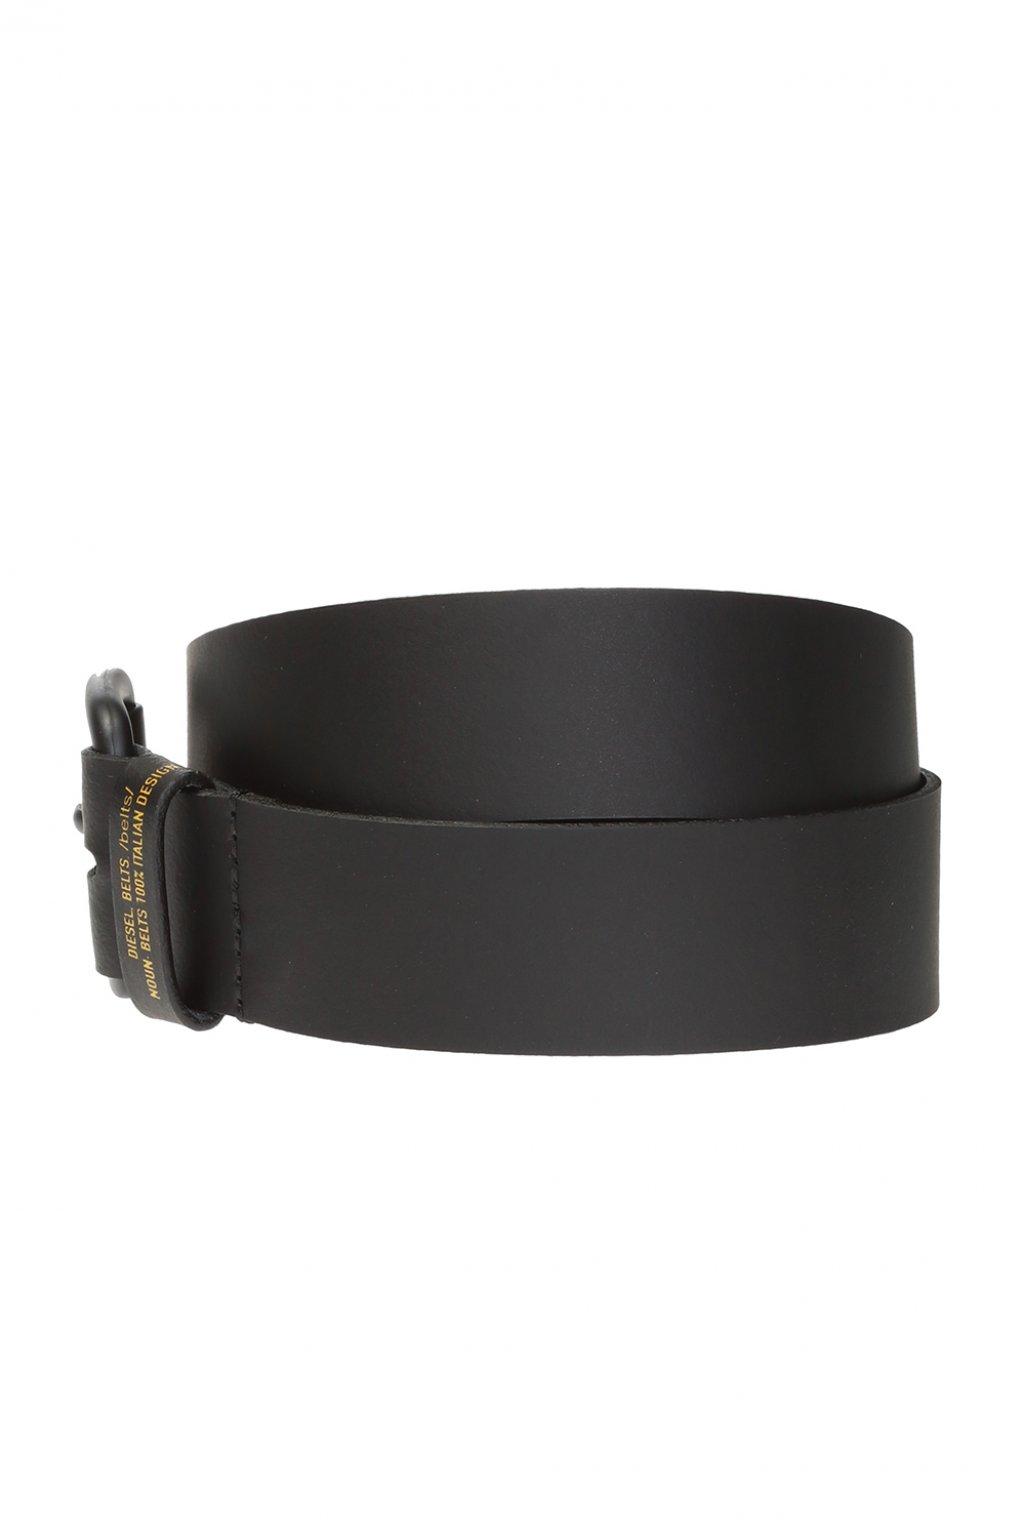 DIESEL Leather Belt With Logo in Black for Men - Lyst